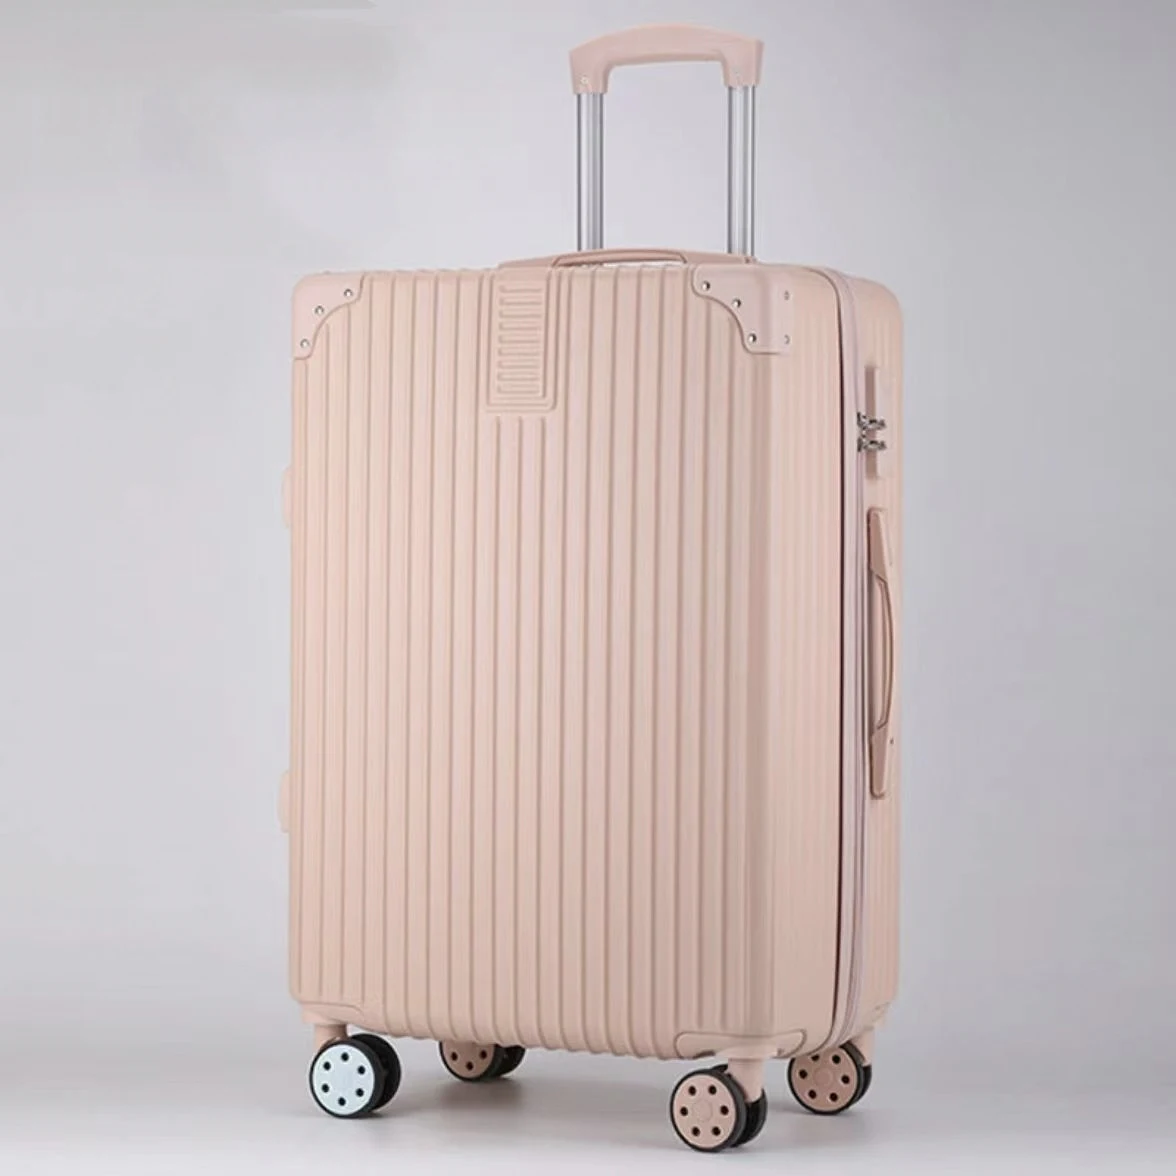 New Large Capacity Luggage Code Travel Case Trolley Case Vintage Fashion High Quality Boarding Luggage